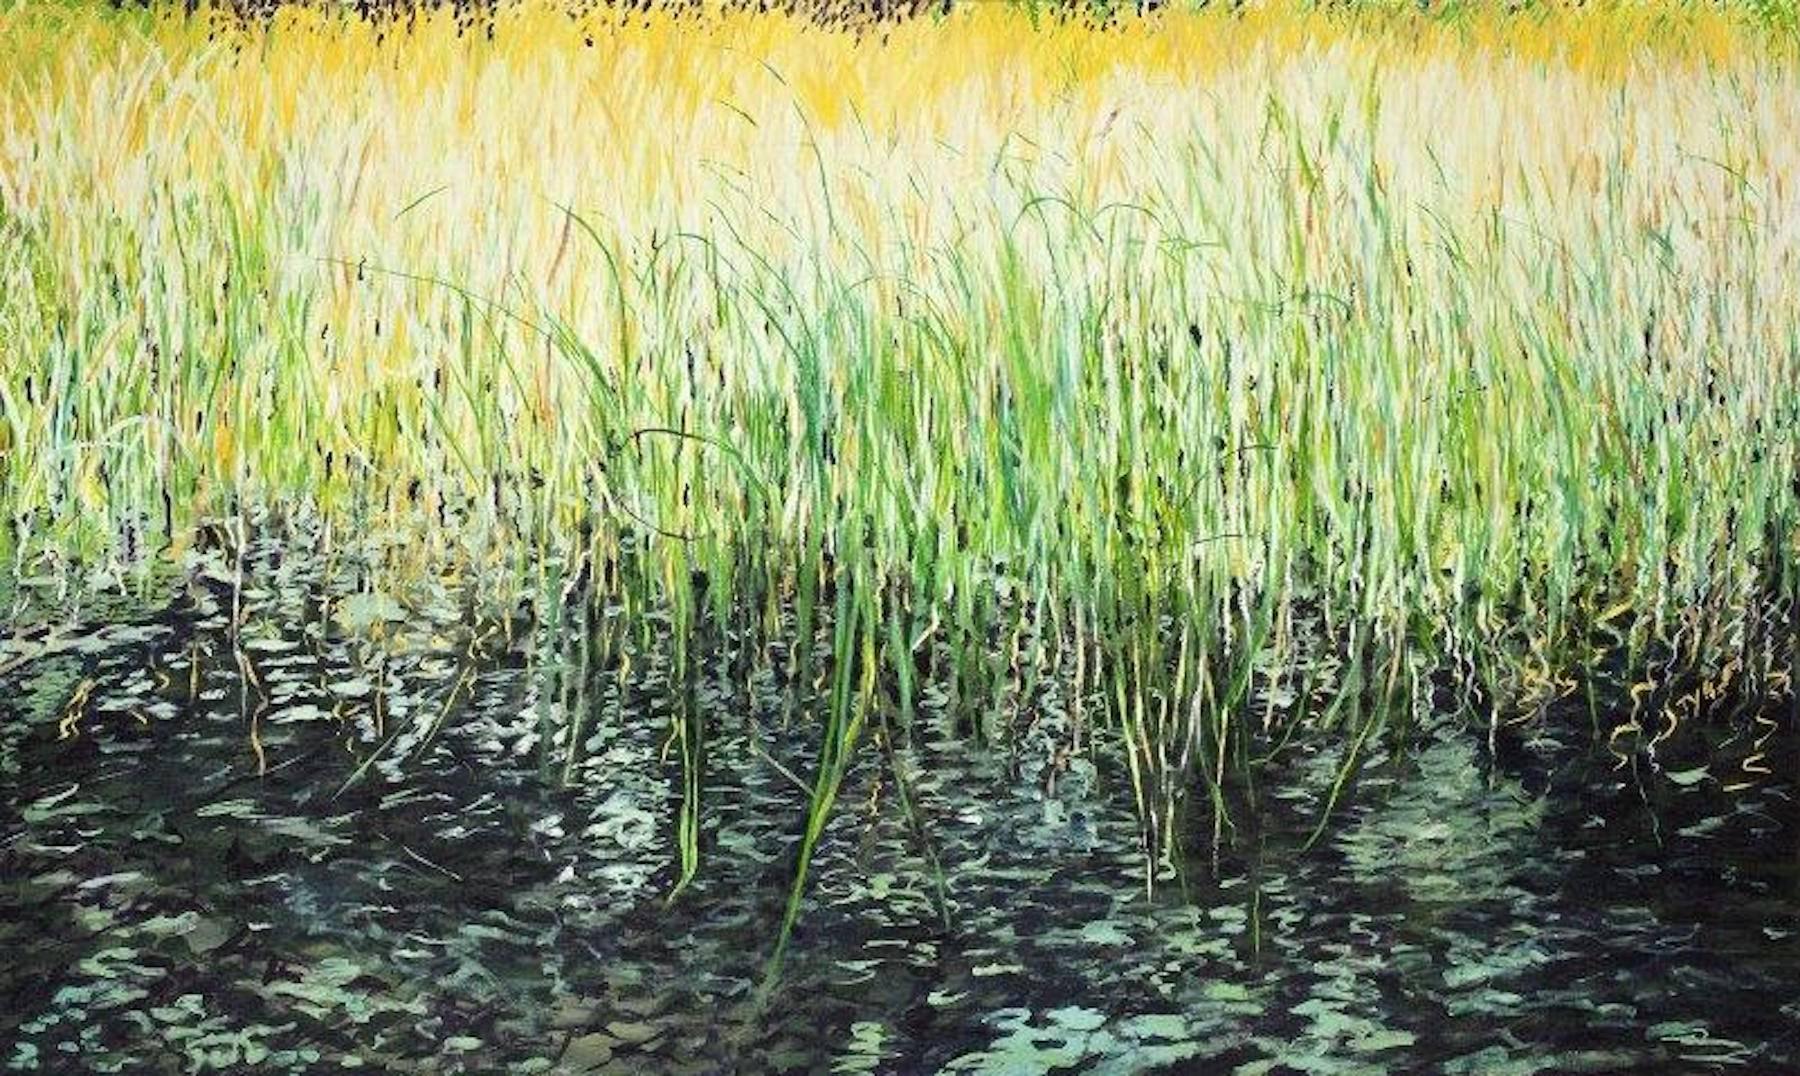 Reeds and Grass